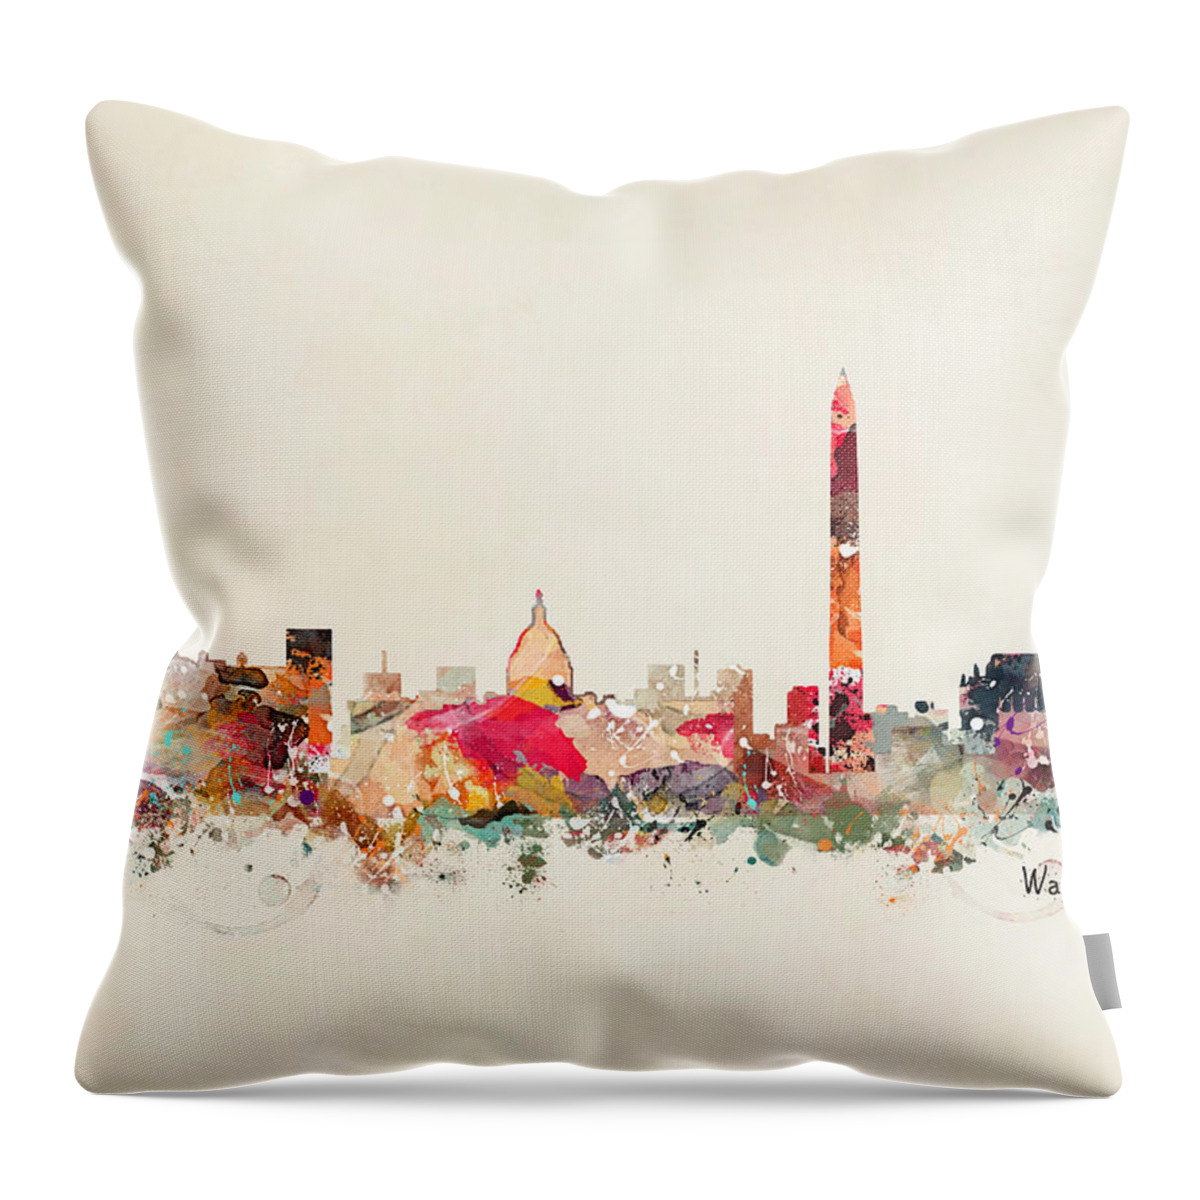 Washington Dc Throw Pillow featuring the painting Washington Dc Skyline by Bri Buckley